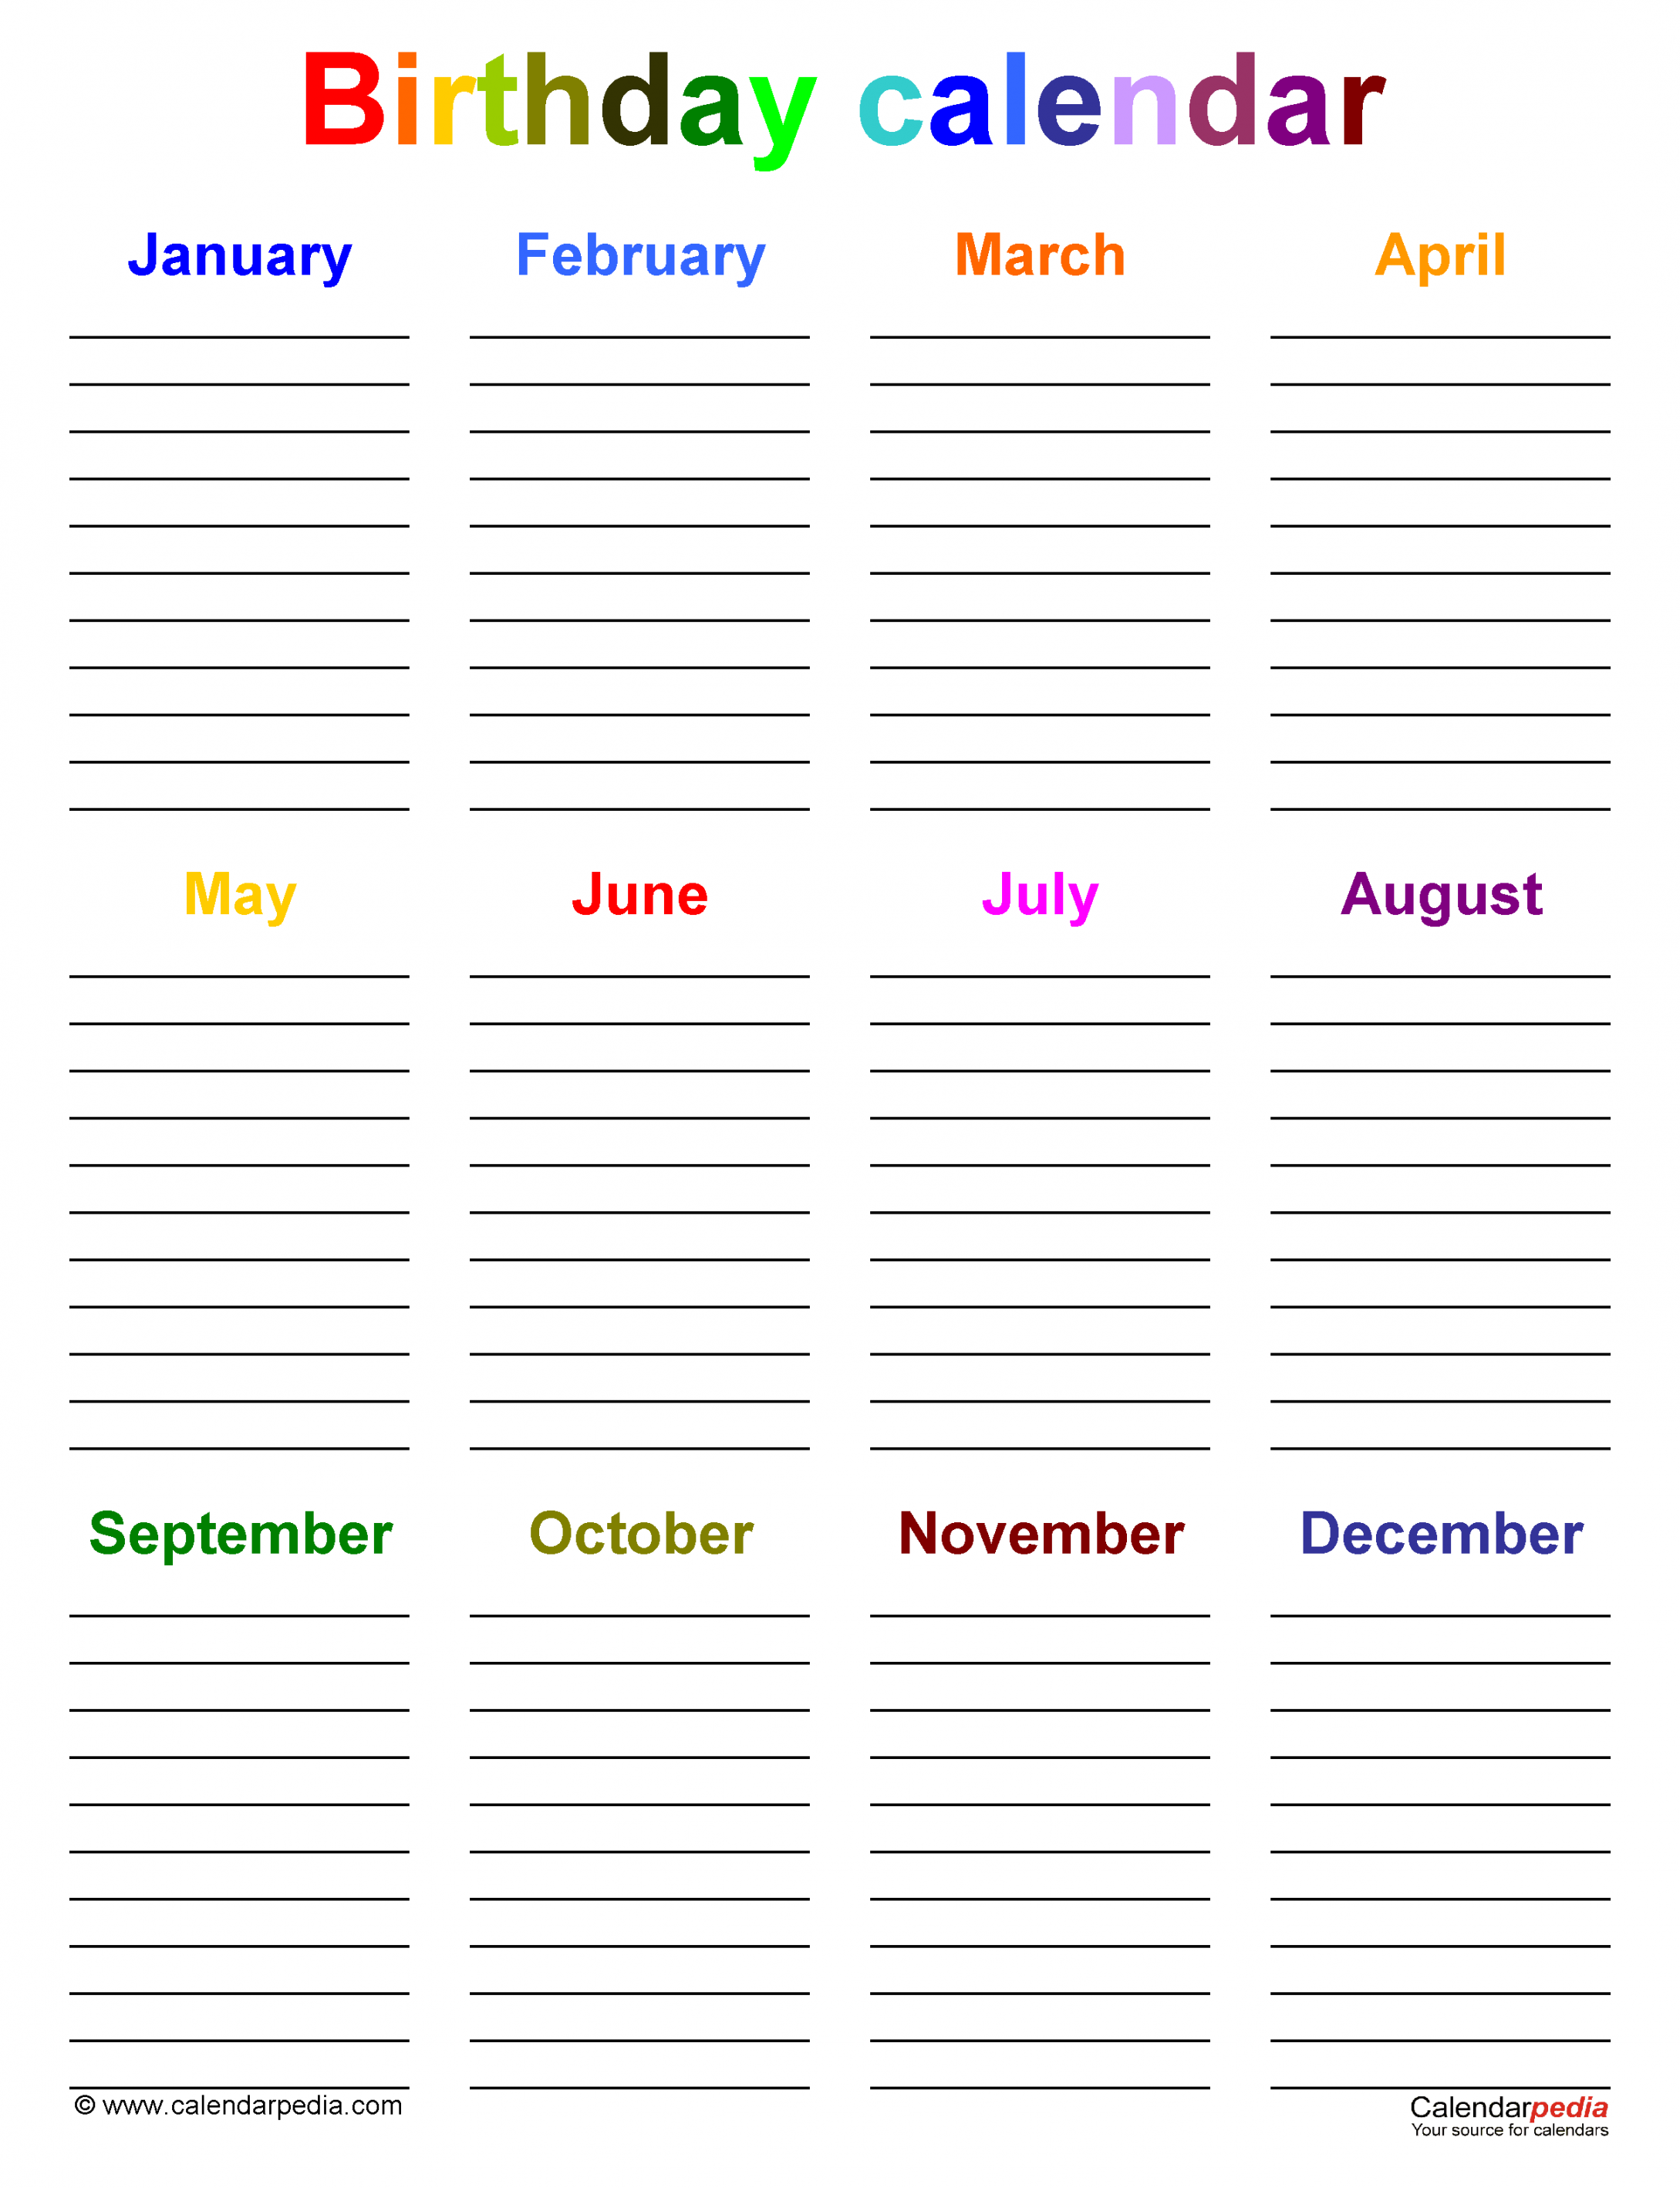 Birthday calendars - Free Printable Microsoft Word templates